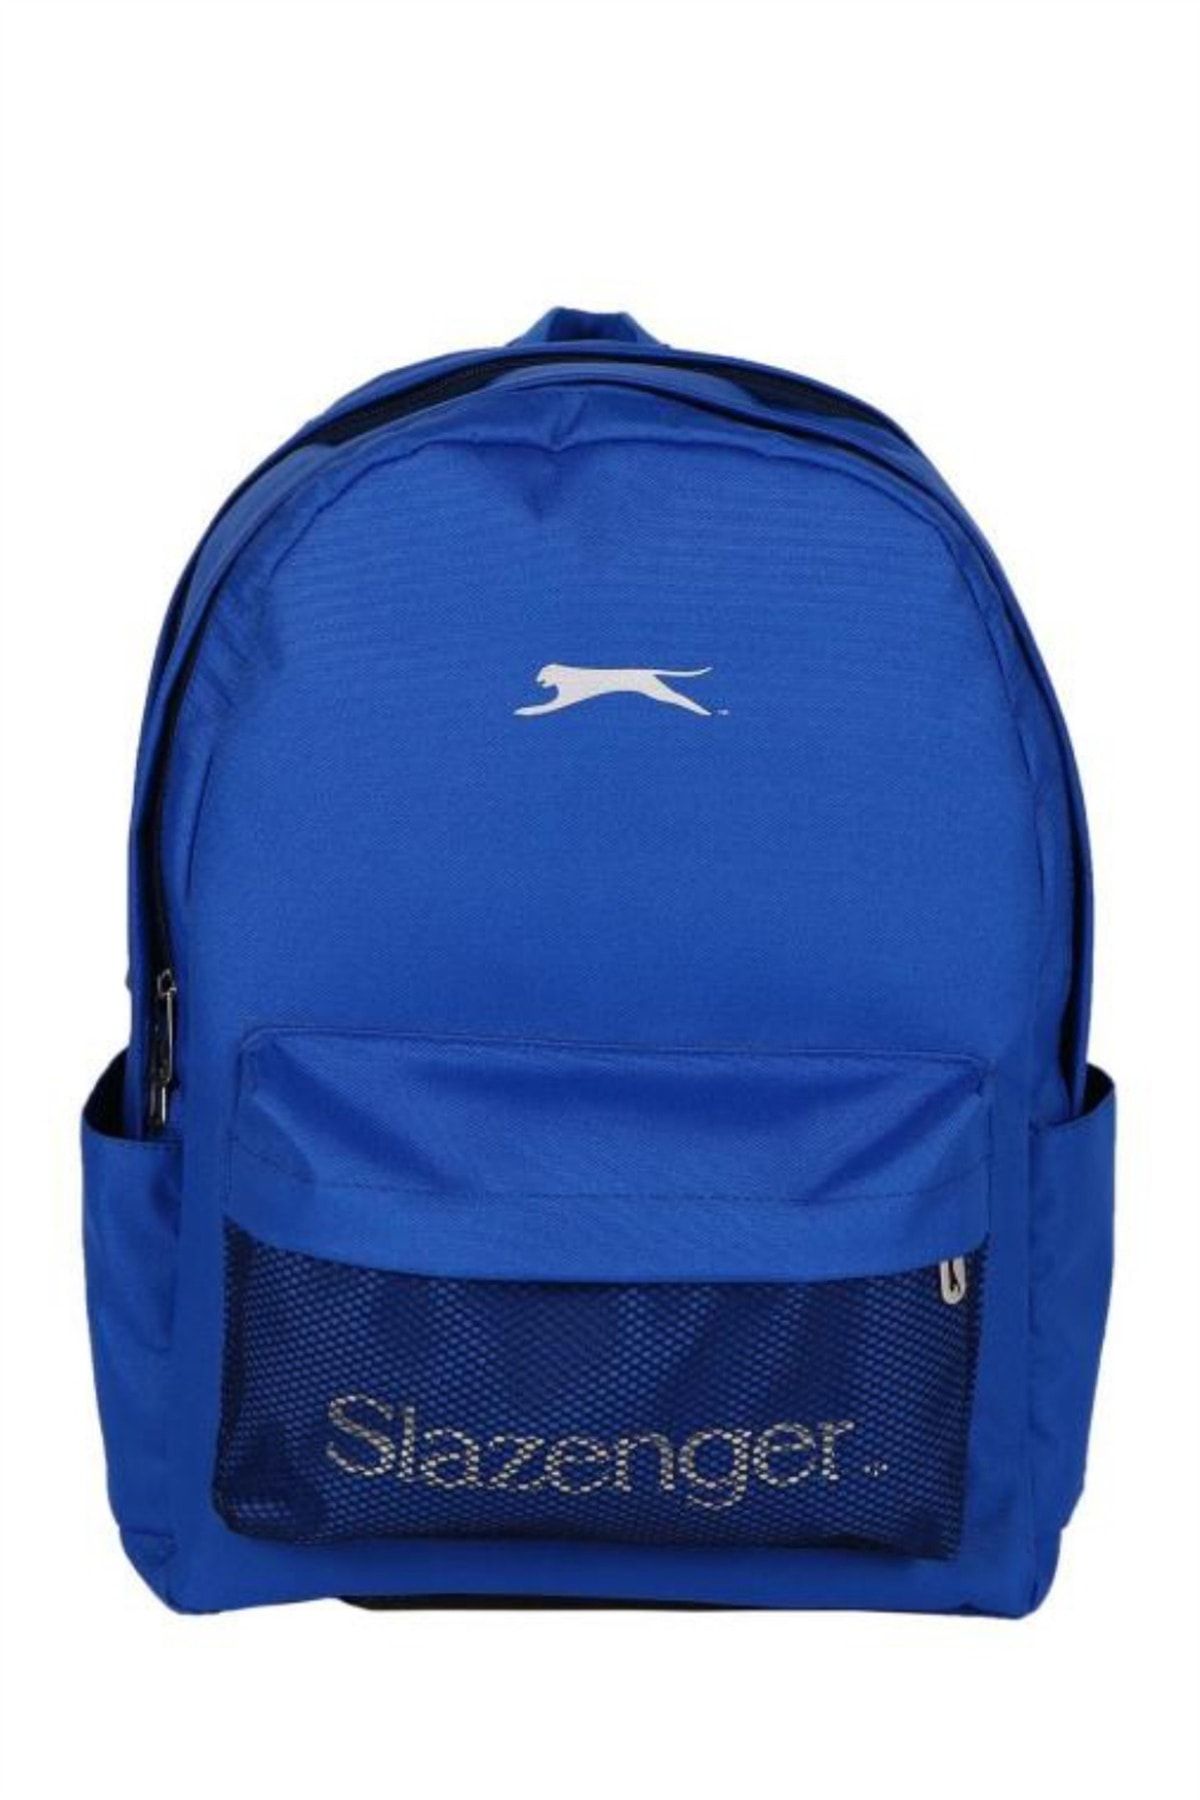 Slazenger File Pocket Backpack 21103 آبی